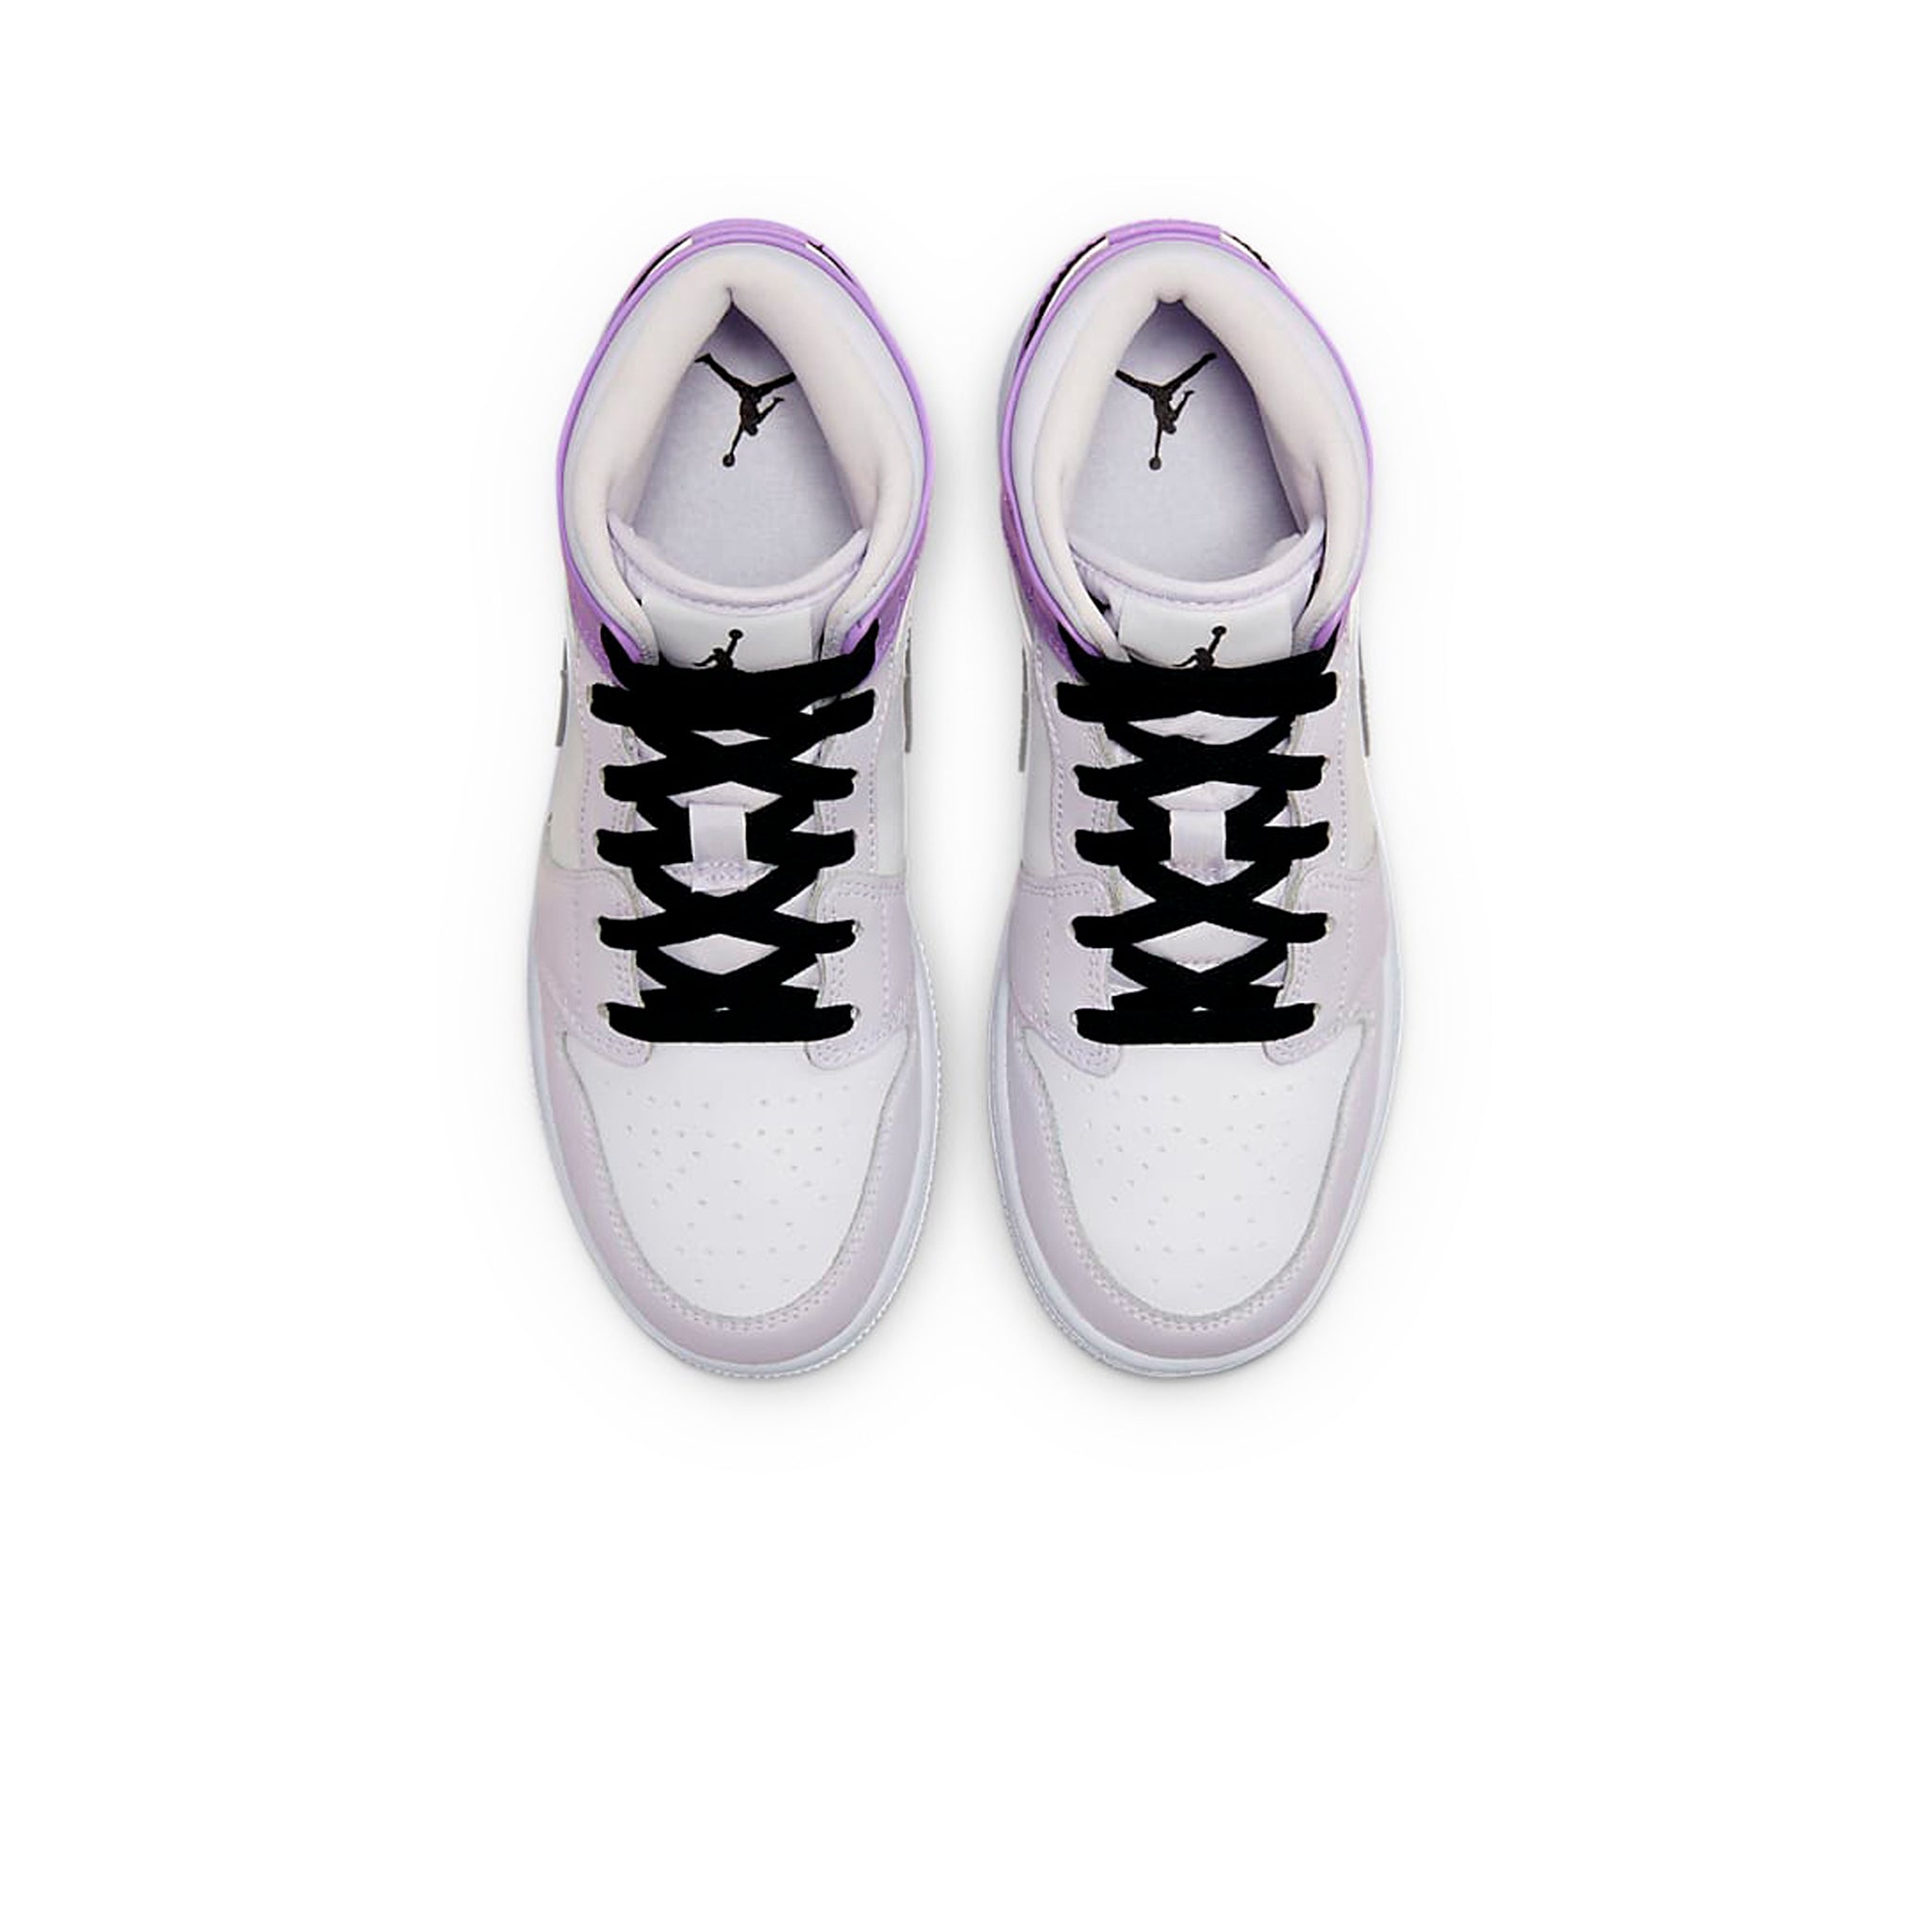 Image of Air Jordan 1 Mid Pink Lavender (GS)